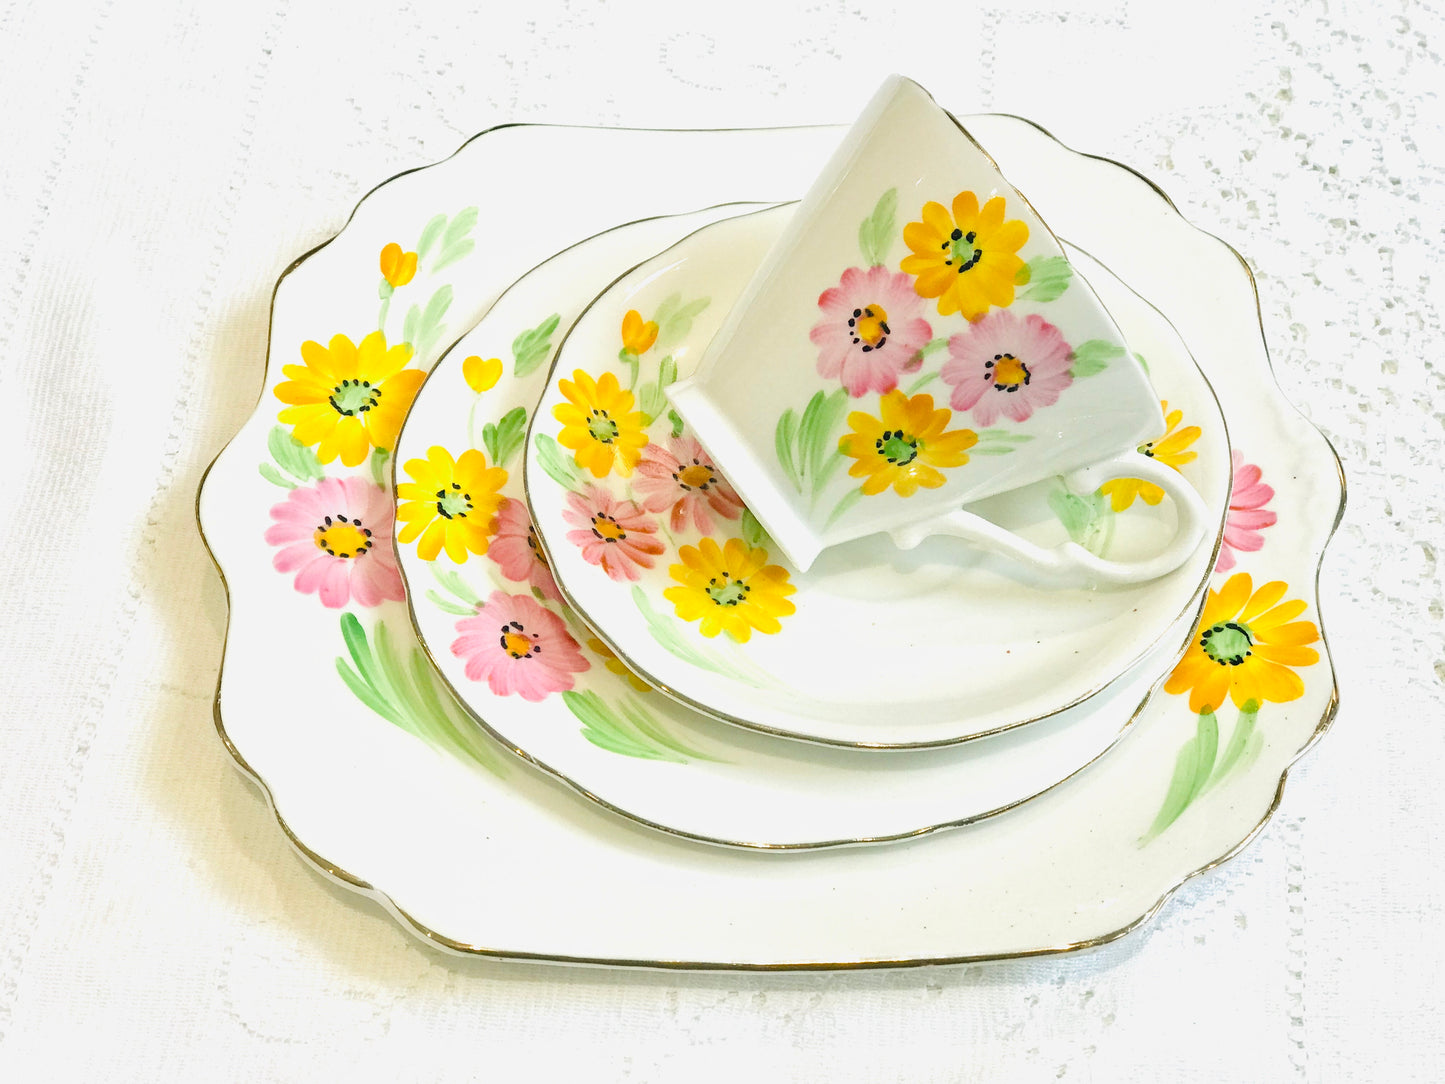 Sold - Pretty Vintage part tea set pink & yellow flowers